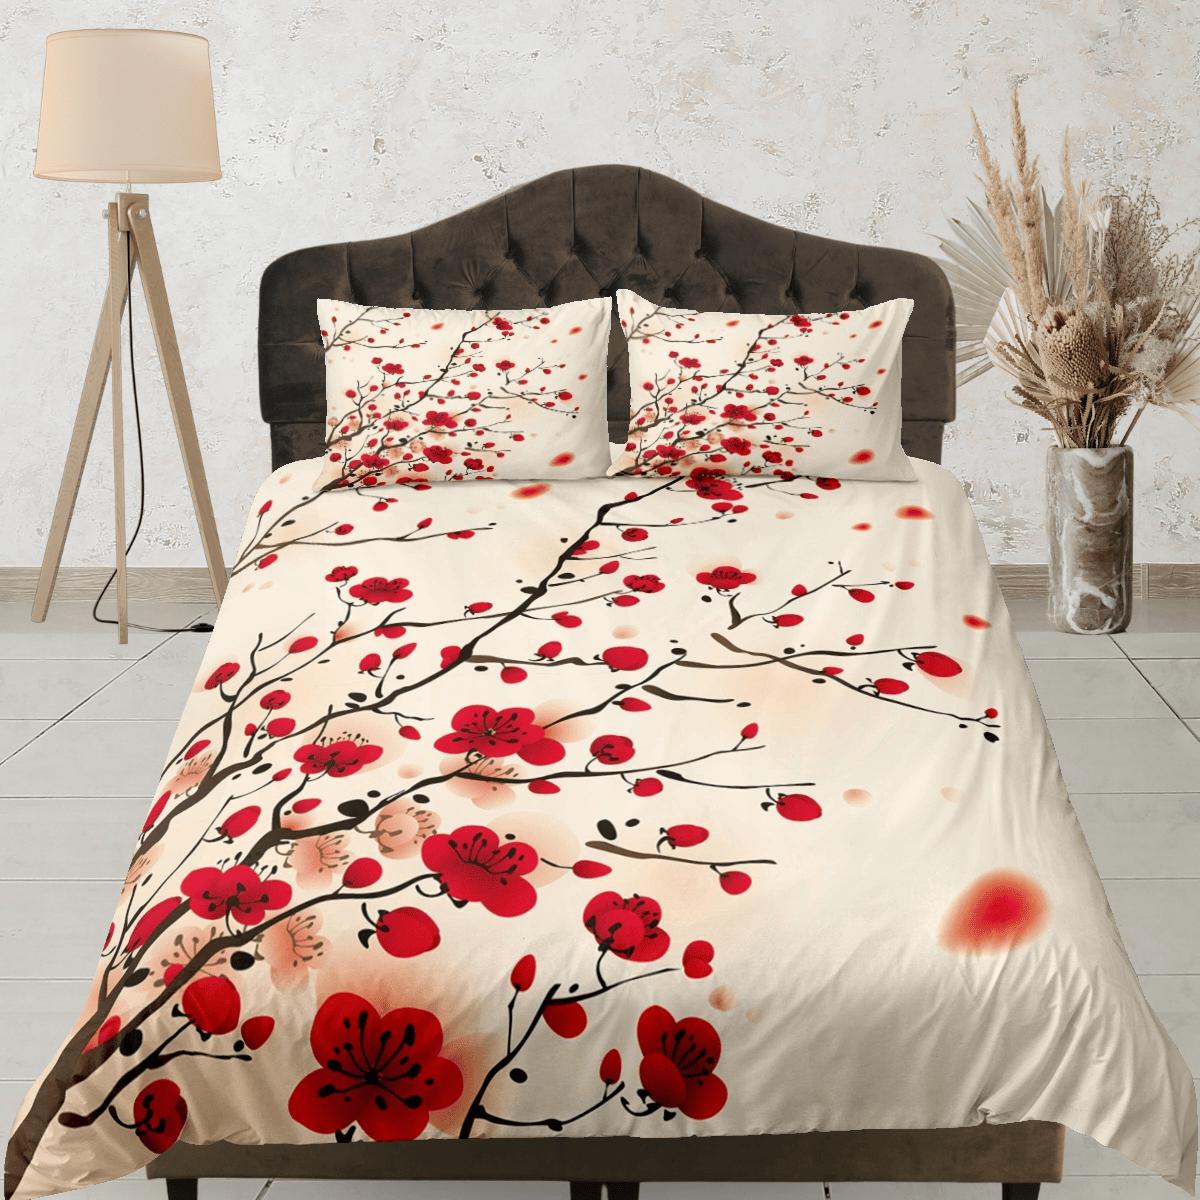 daintyduvet Oriental cherry blossom beige bedding floral prints duvet cover queen, king, boho bedding designer bedspread full size bedding aesthetic